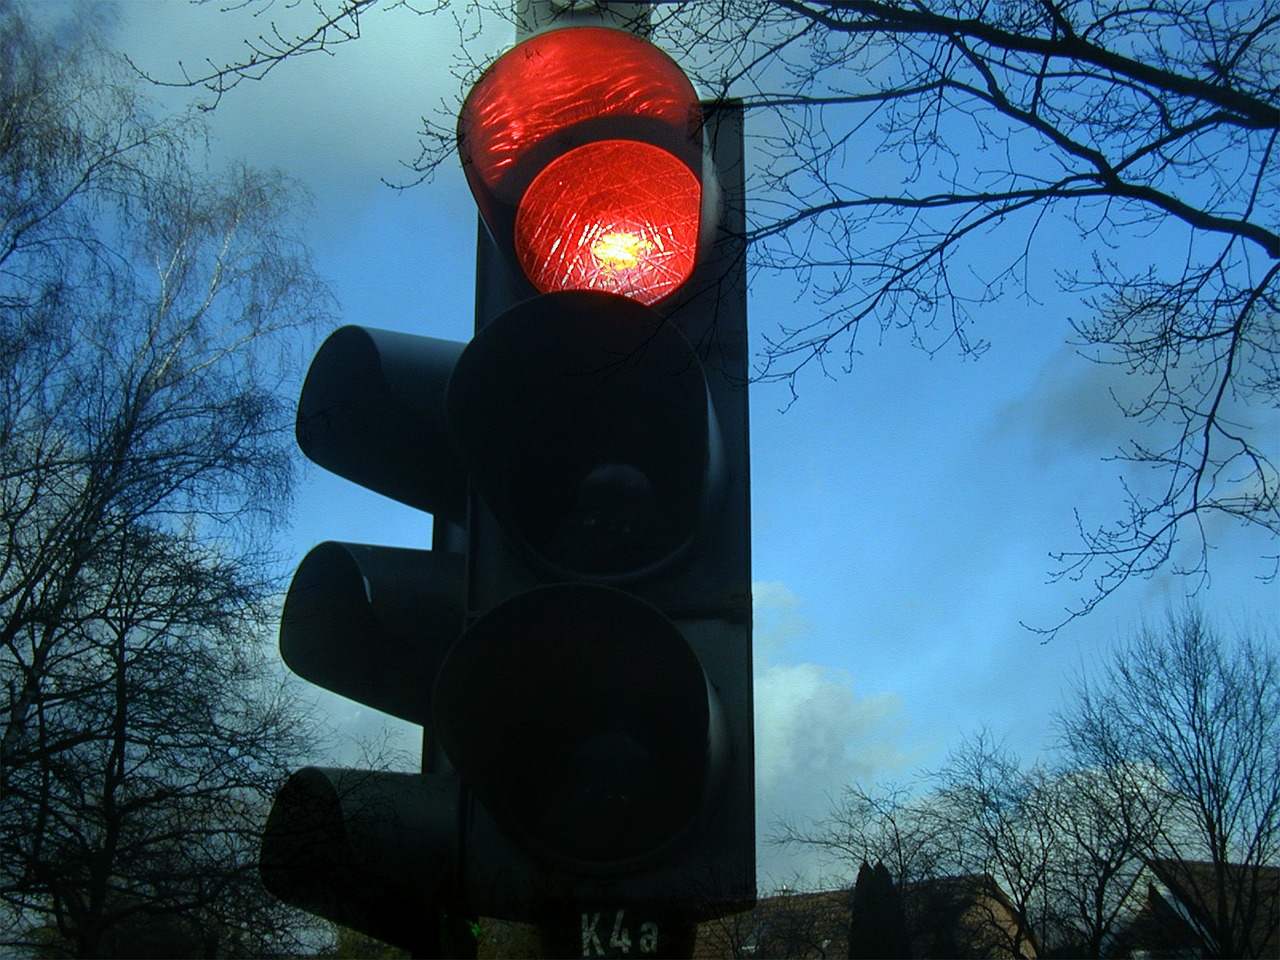 red traffic light